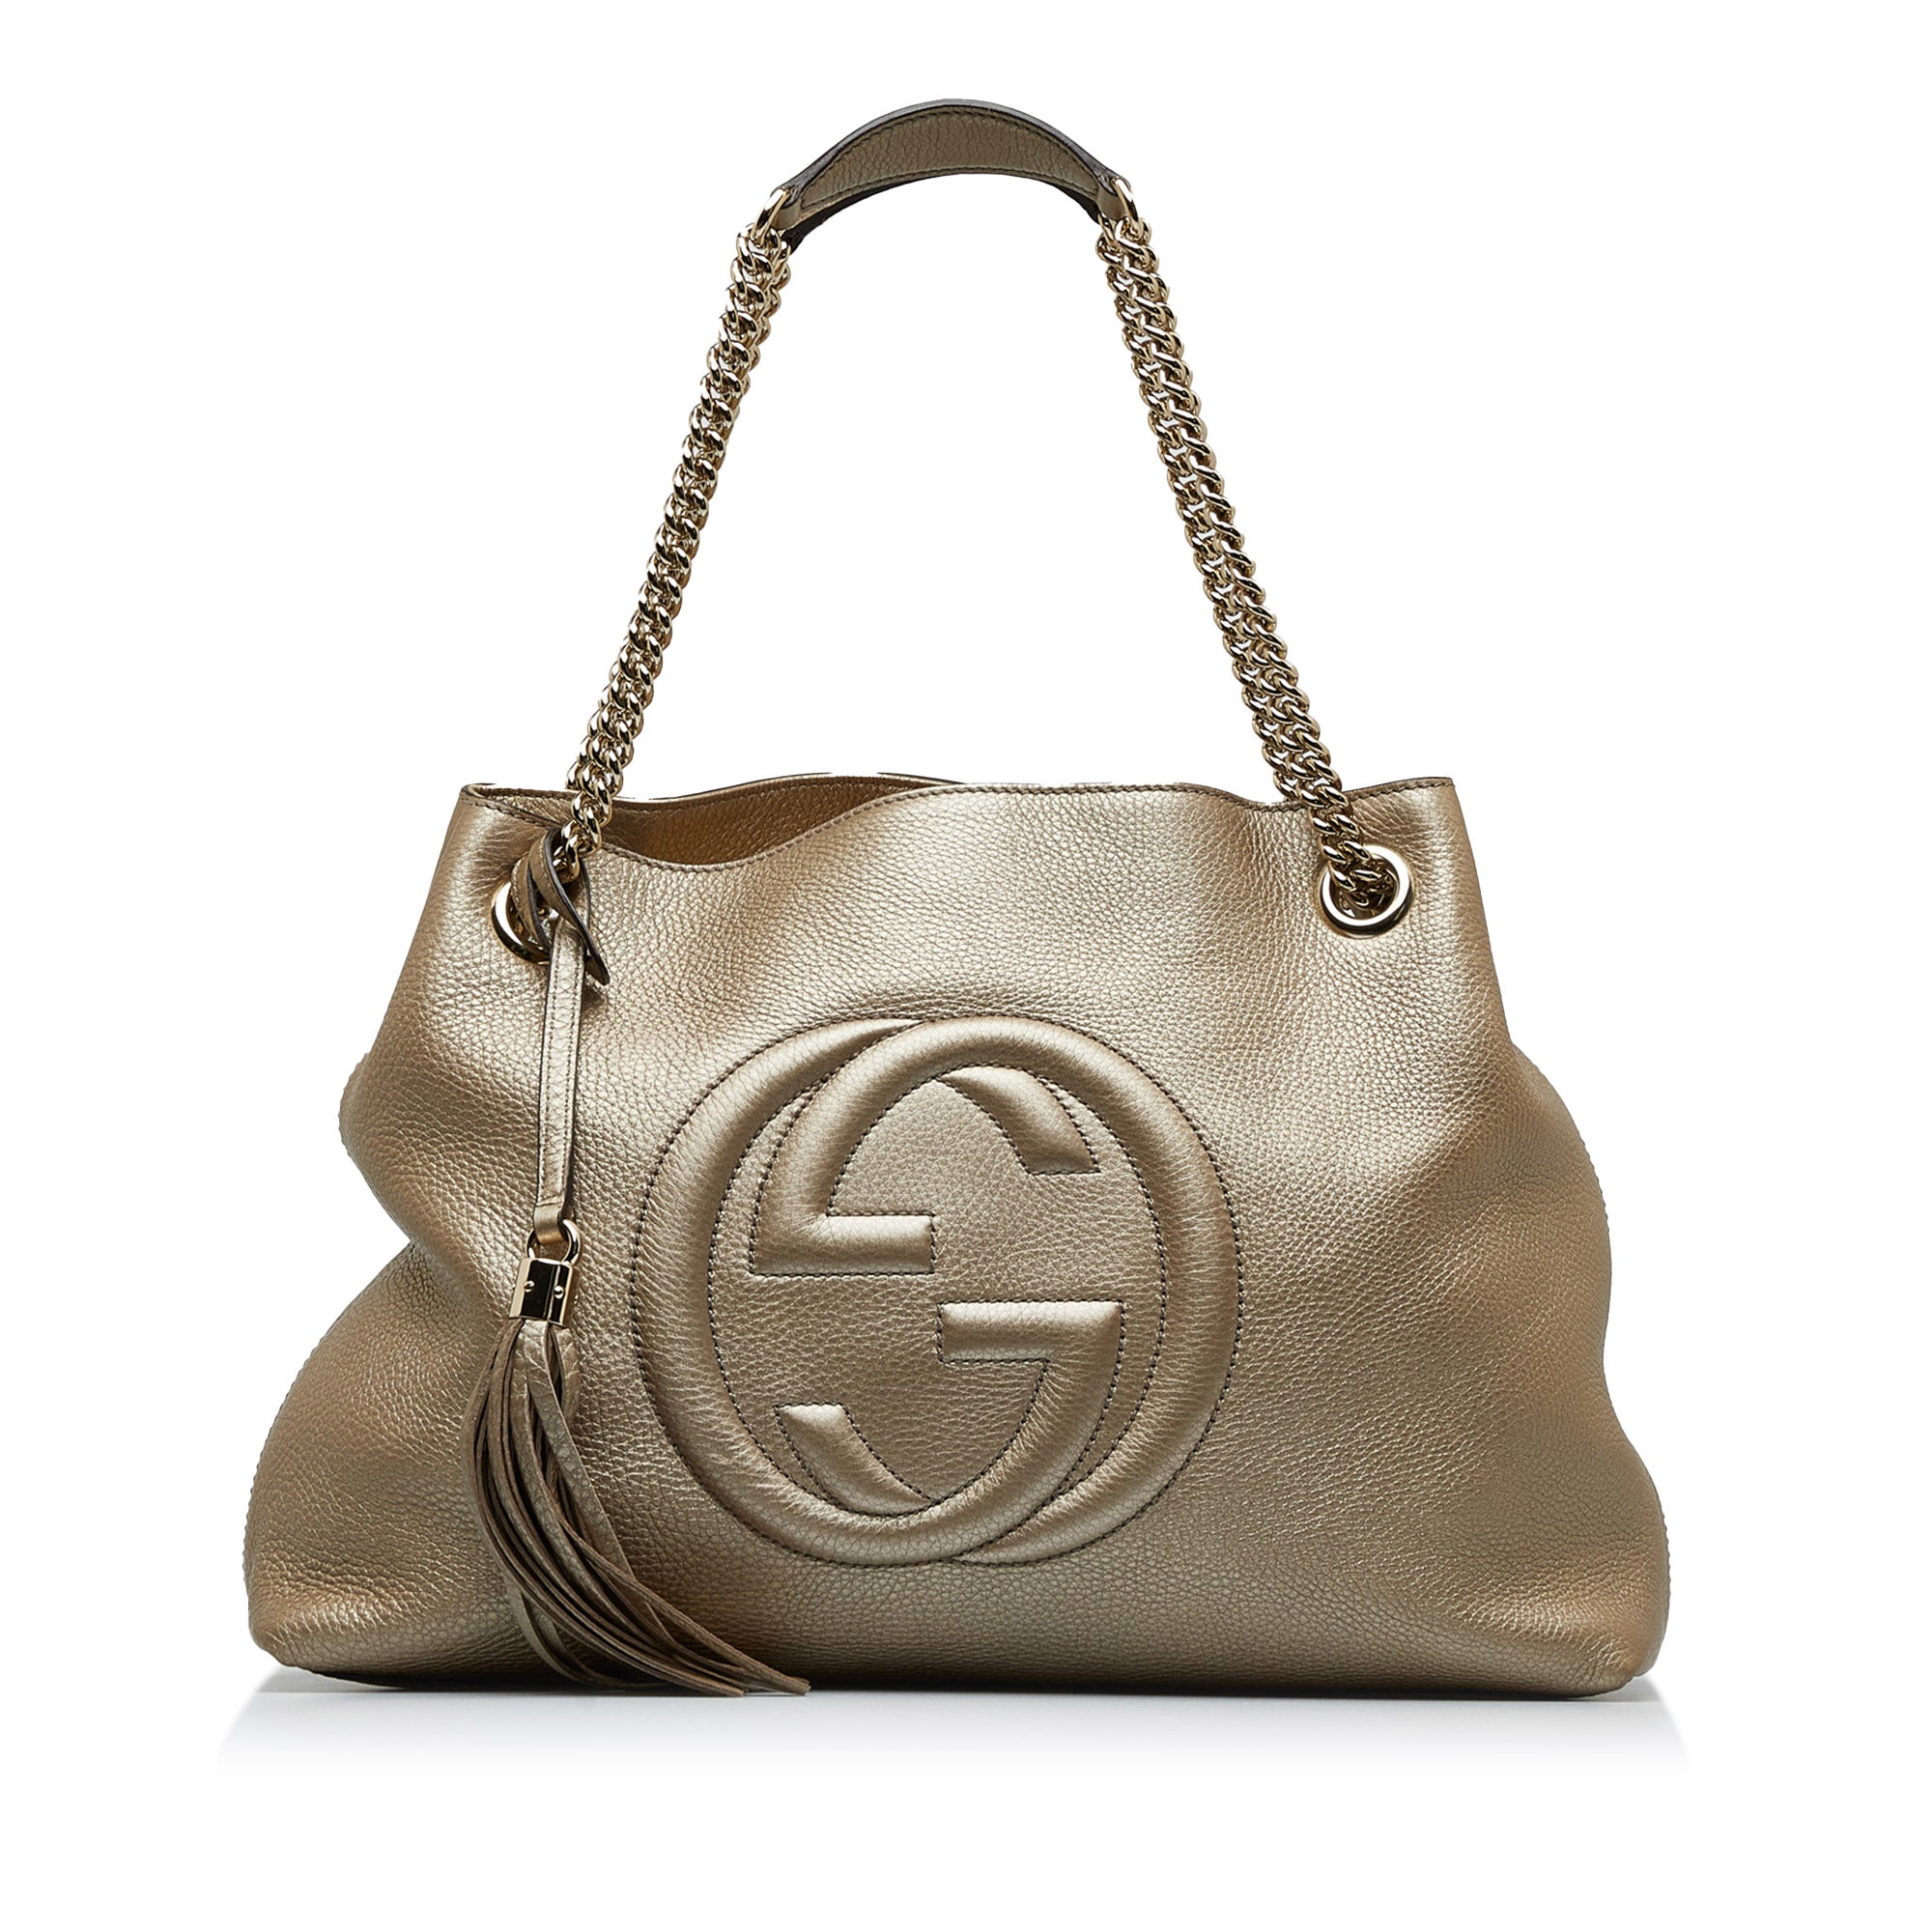 Gucci Soho Gold Metallic Leather Medium Chain Shoulder Bag.